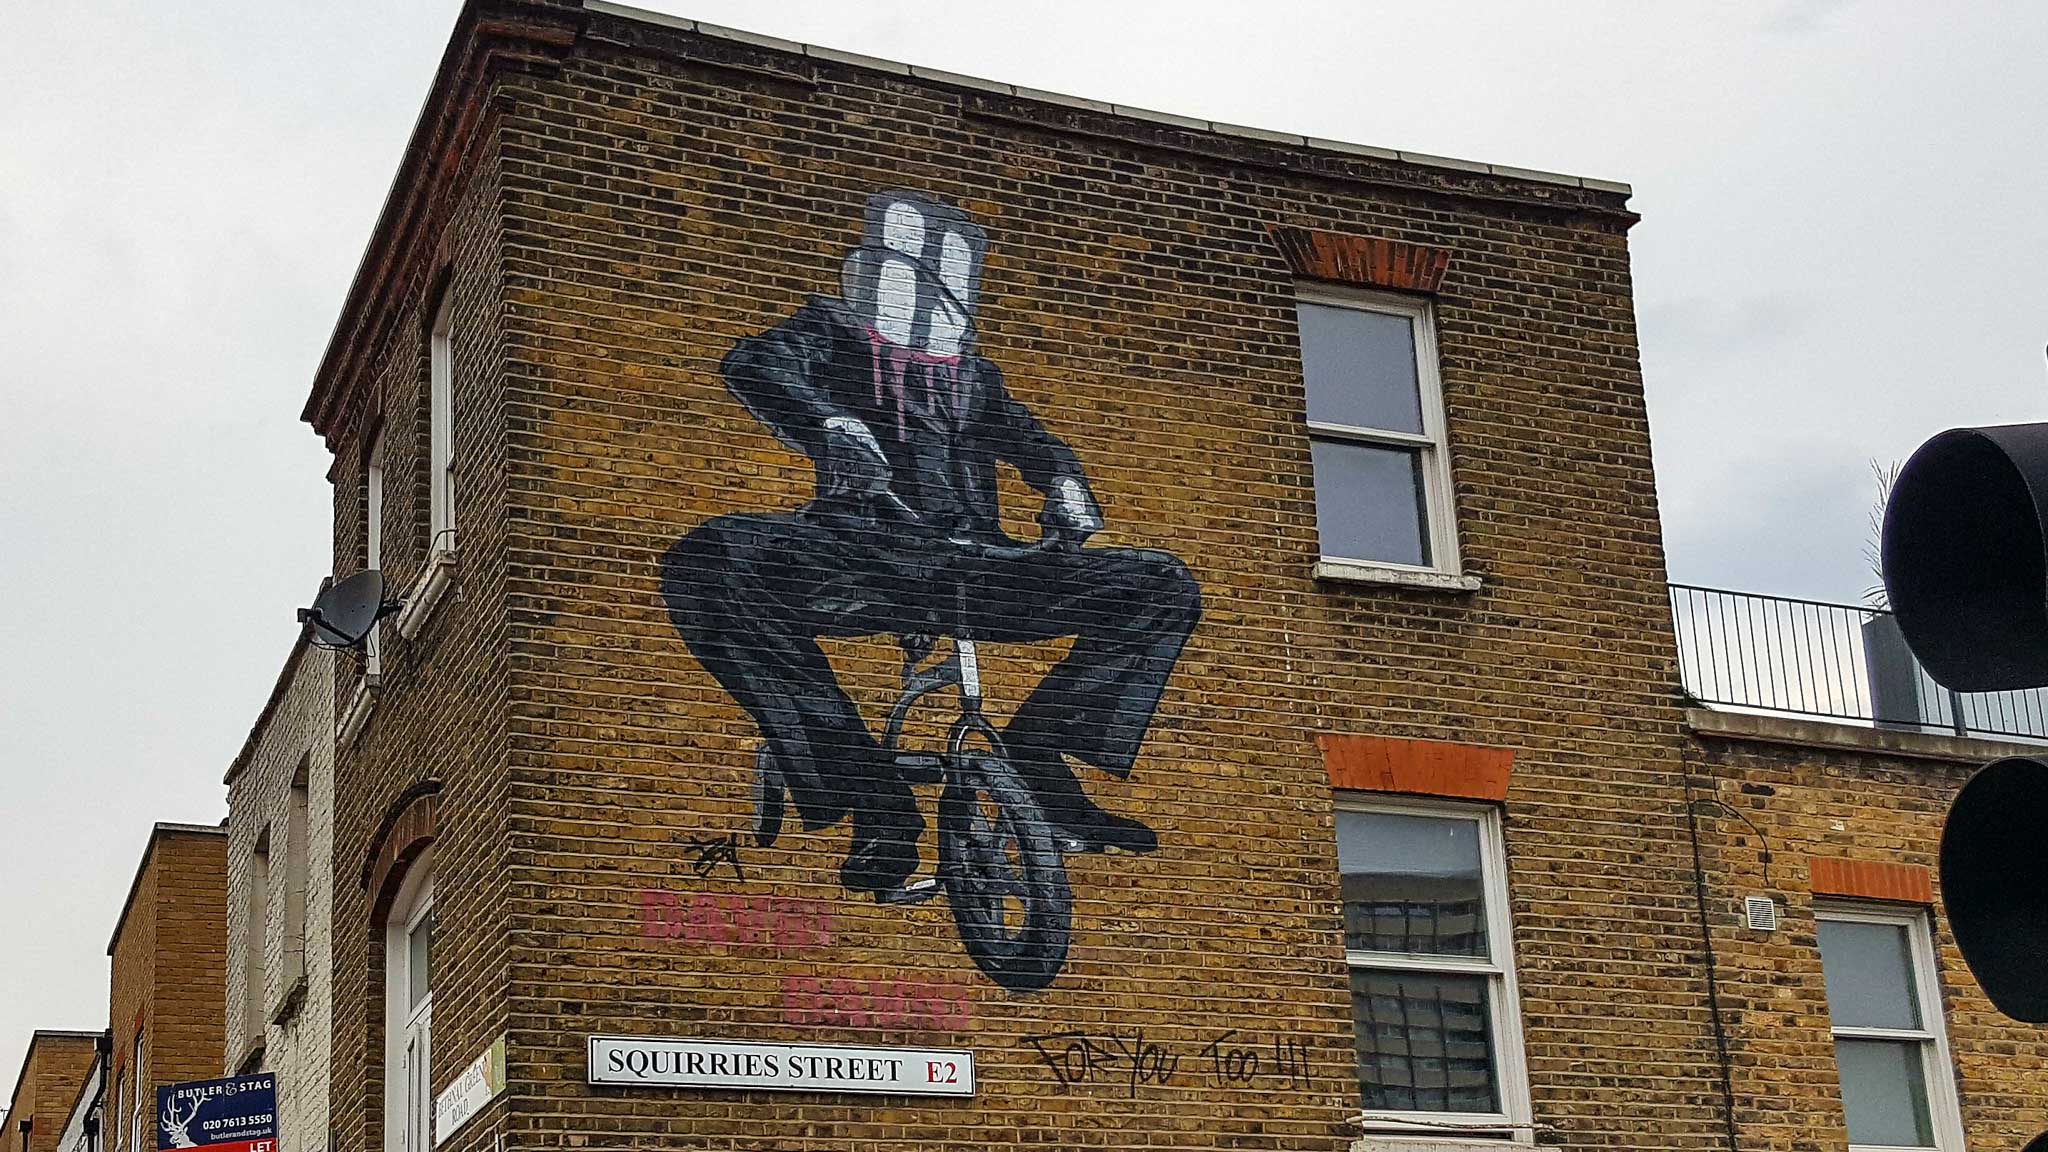 Mural by David David on Suqirries street in London's Eastend